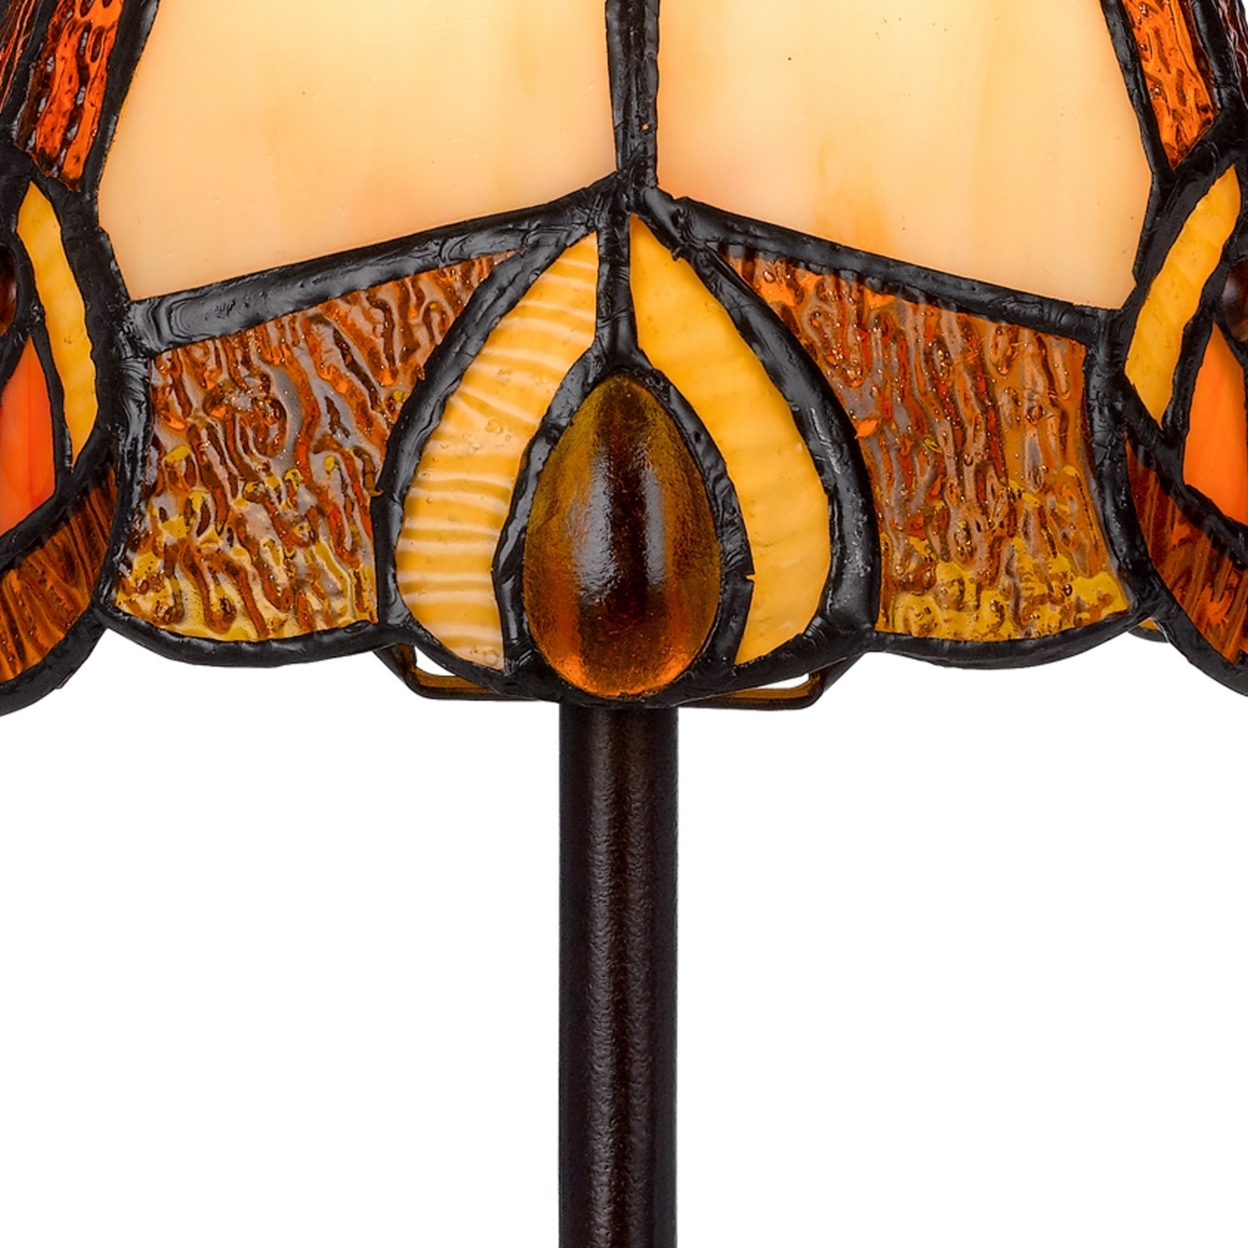 Eli 13 Inch Accent Lamp, Painted Multicolor Tiffany Style Shade, Bronze- Saltoro Sherpi